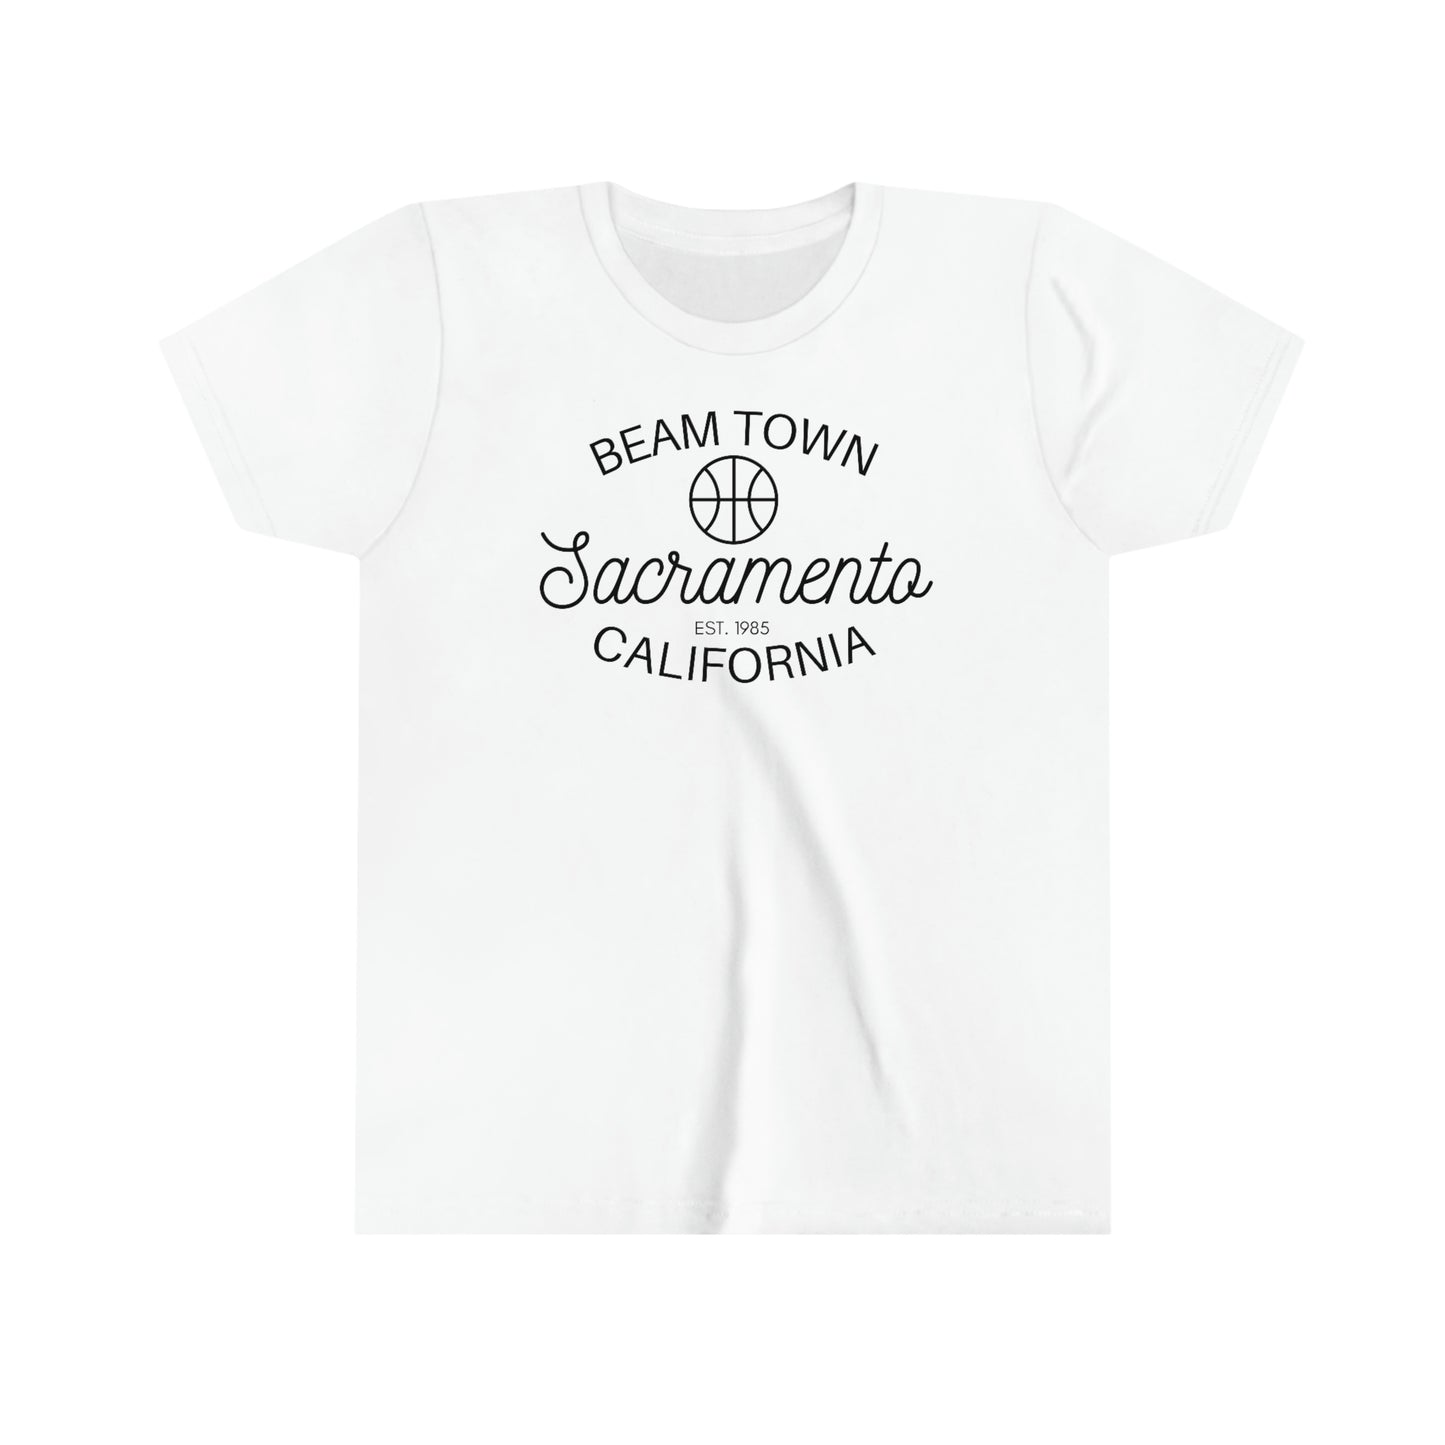 Retro BeamTown Youth T-Shirt, Sacramento Basketball, Kids Youth Unisex Tee, Sac Basketball Gift Kids Fan Gift, Light the Beam Shirt, Vintage Vibe, Retro Style Tee Shirt, White Shirt